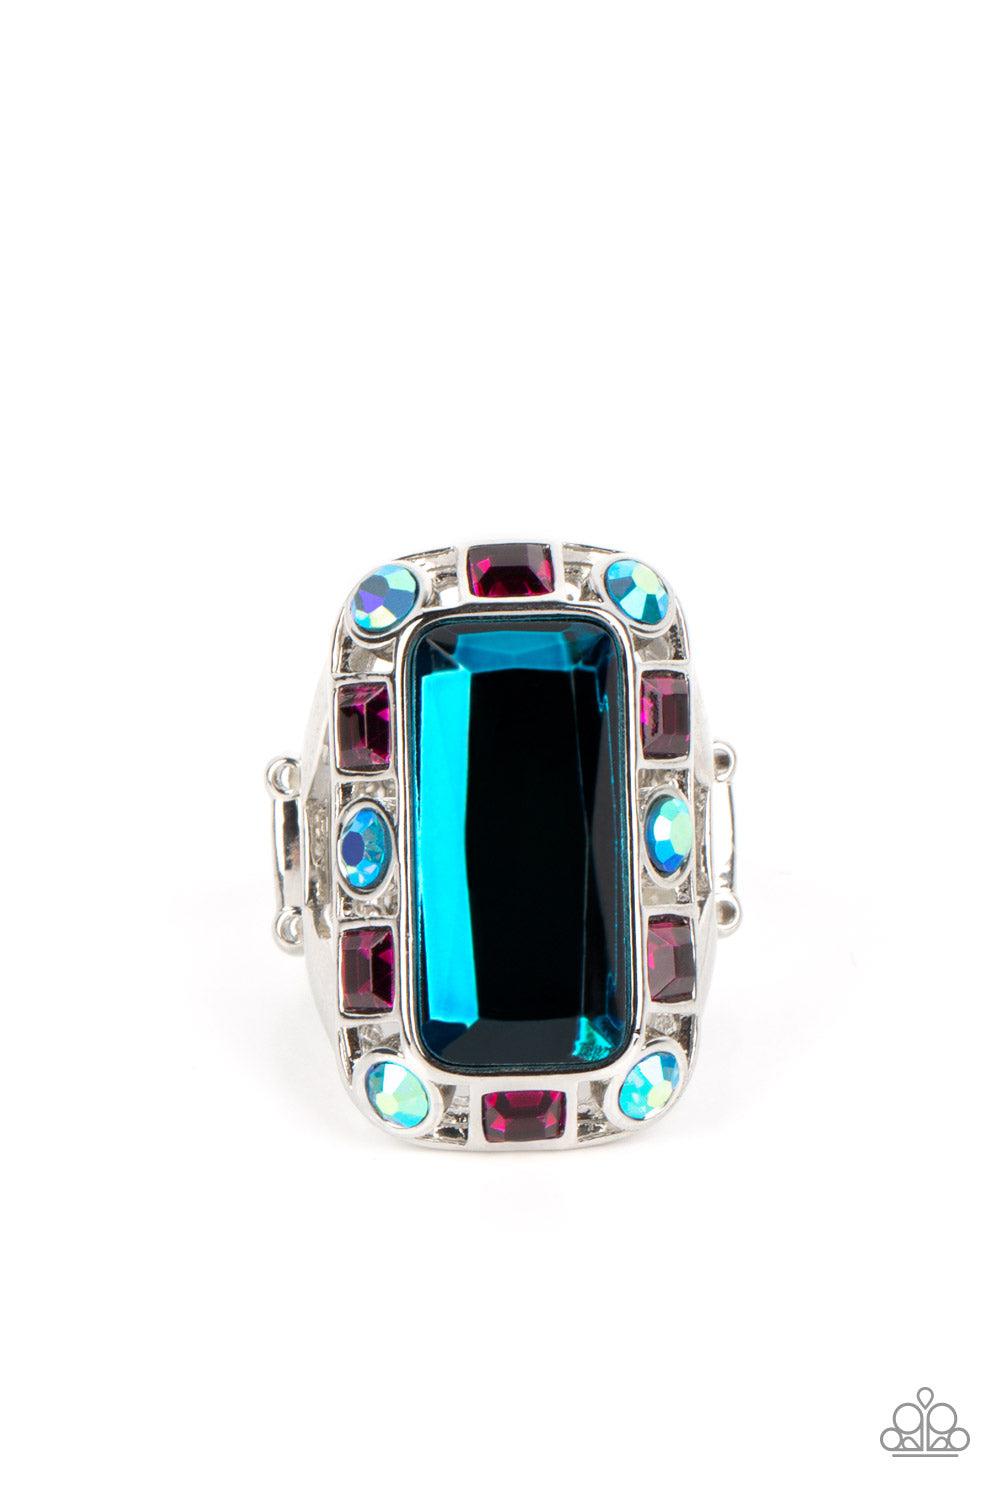 Radiant Rhinestones Multi Ring - Paparazzi Accessories- lightbox - CarasShop.com - $5 Jewelry by Cara Jewels